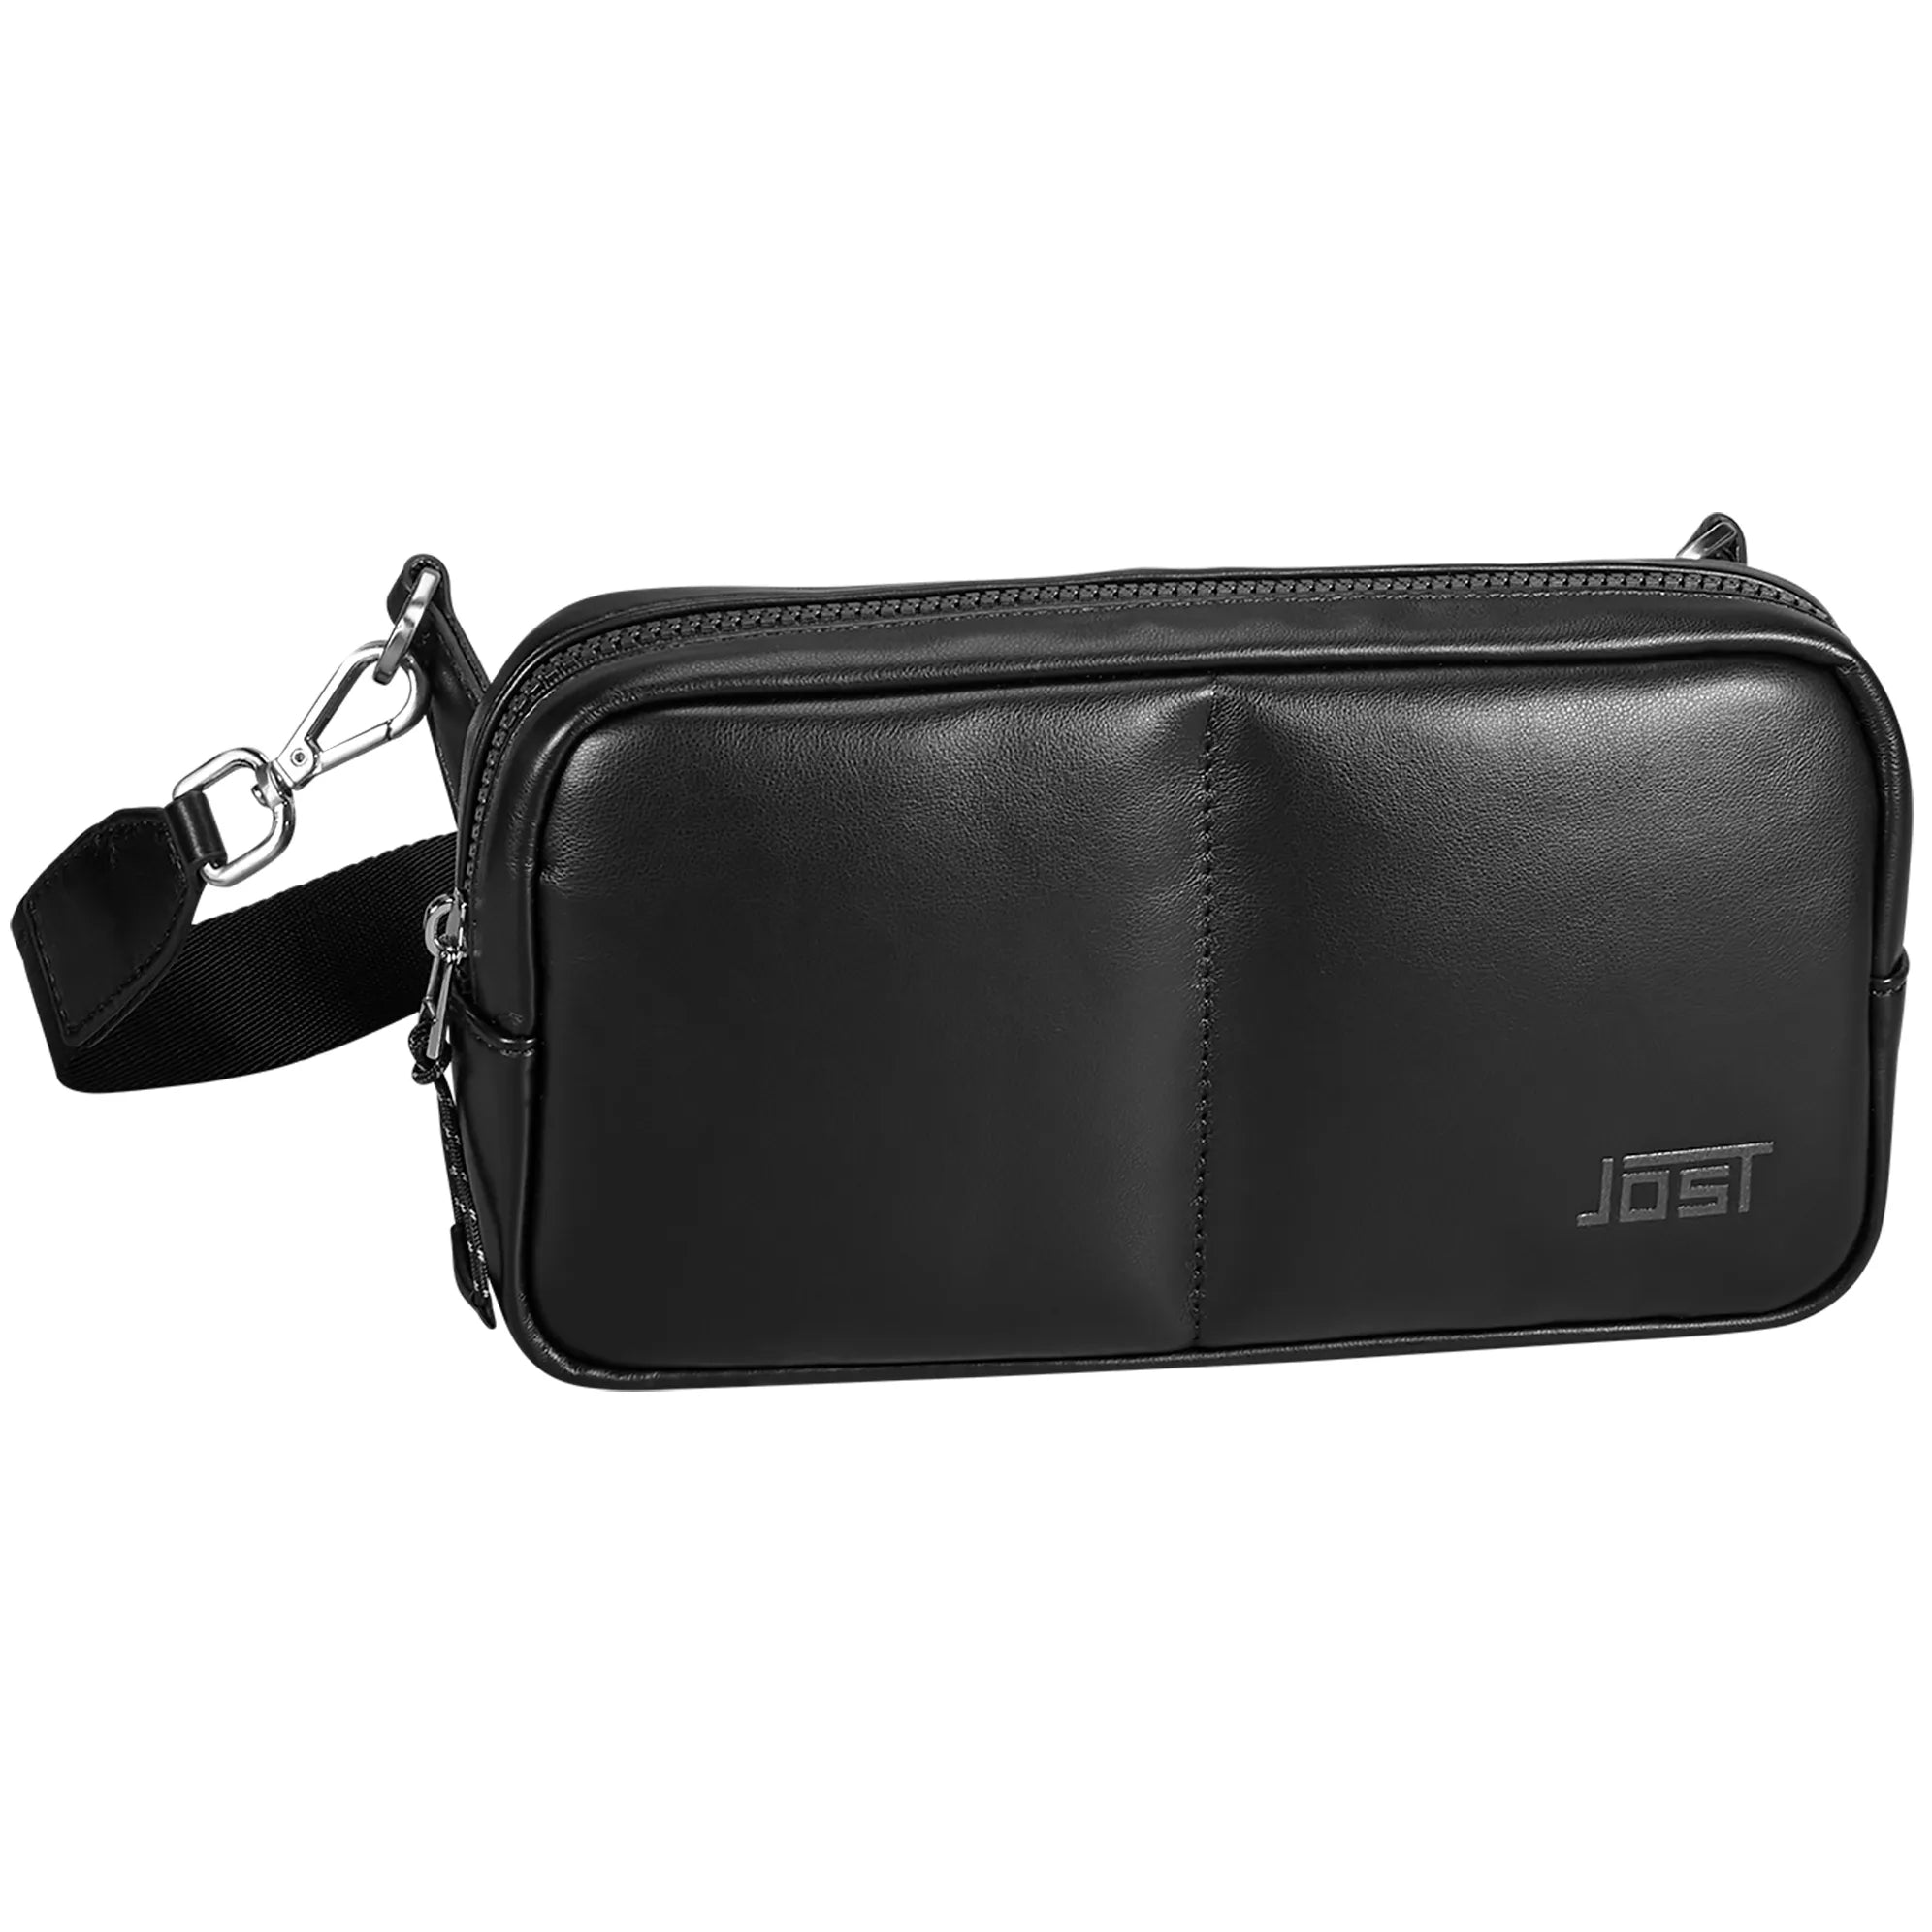 Jost Lovisa Crossover Bag 24 cm - schwarz